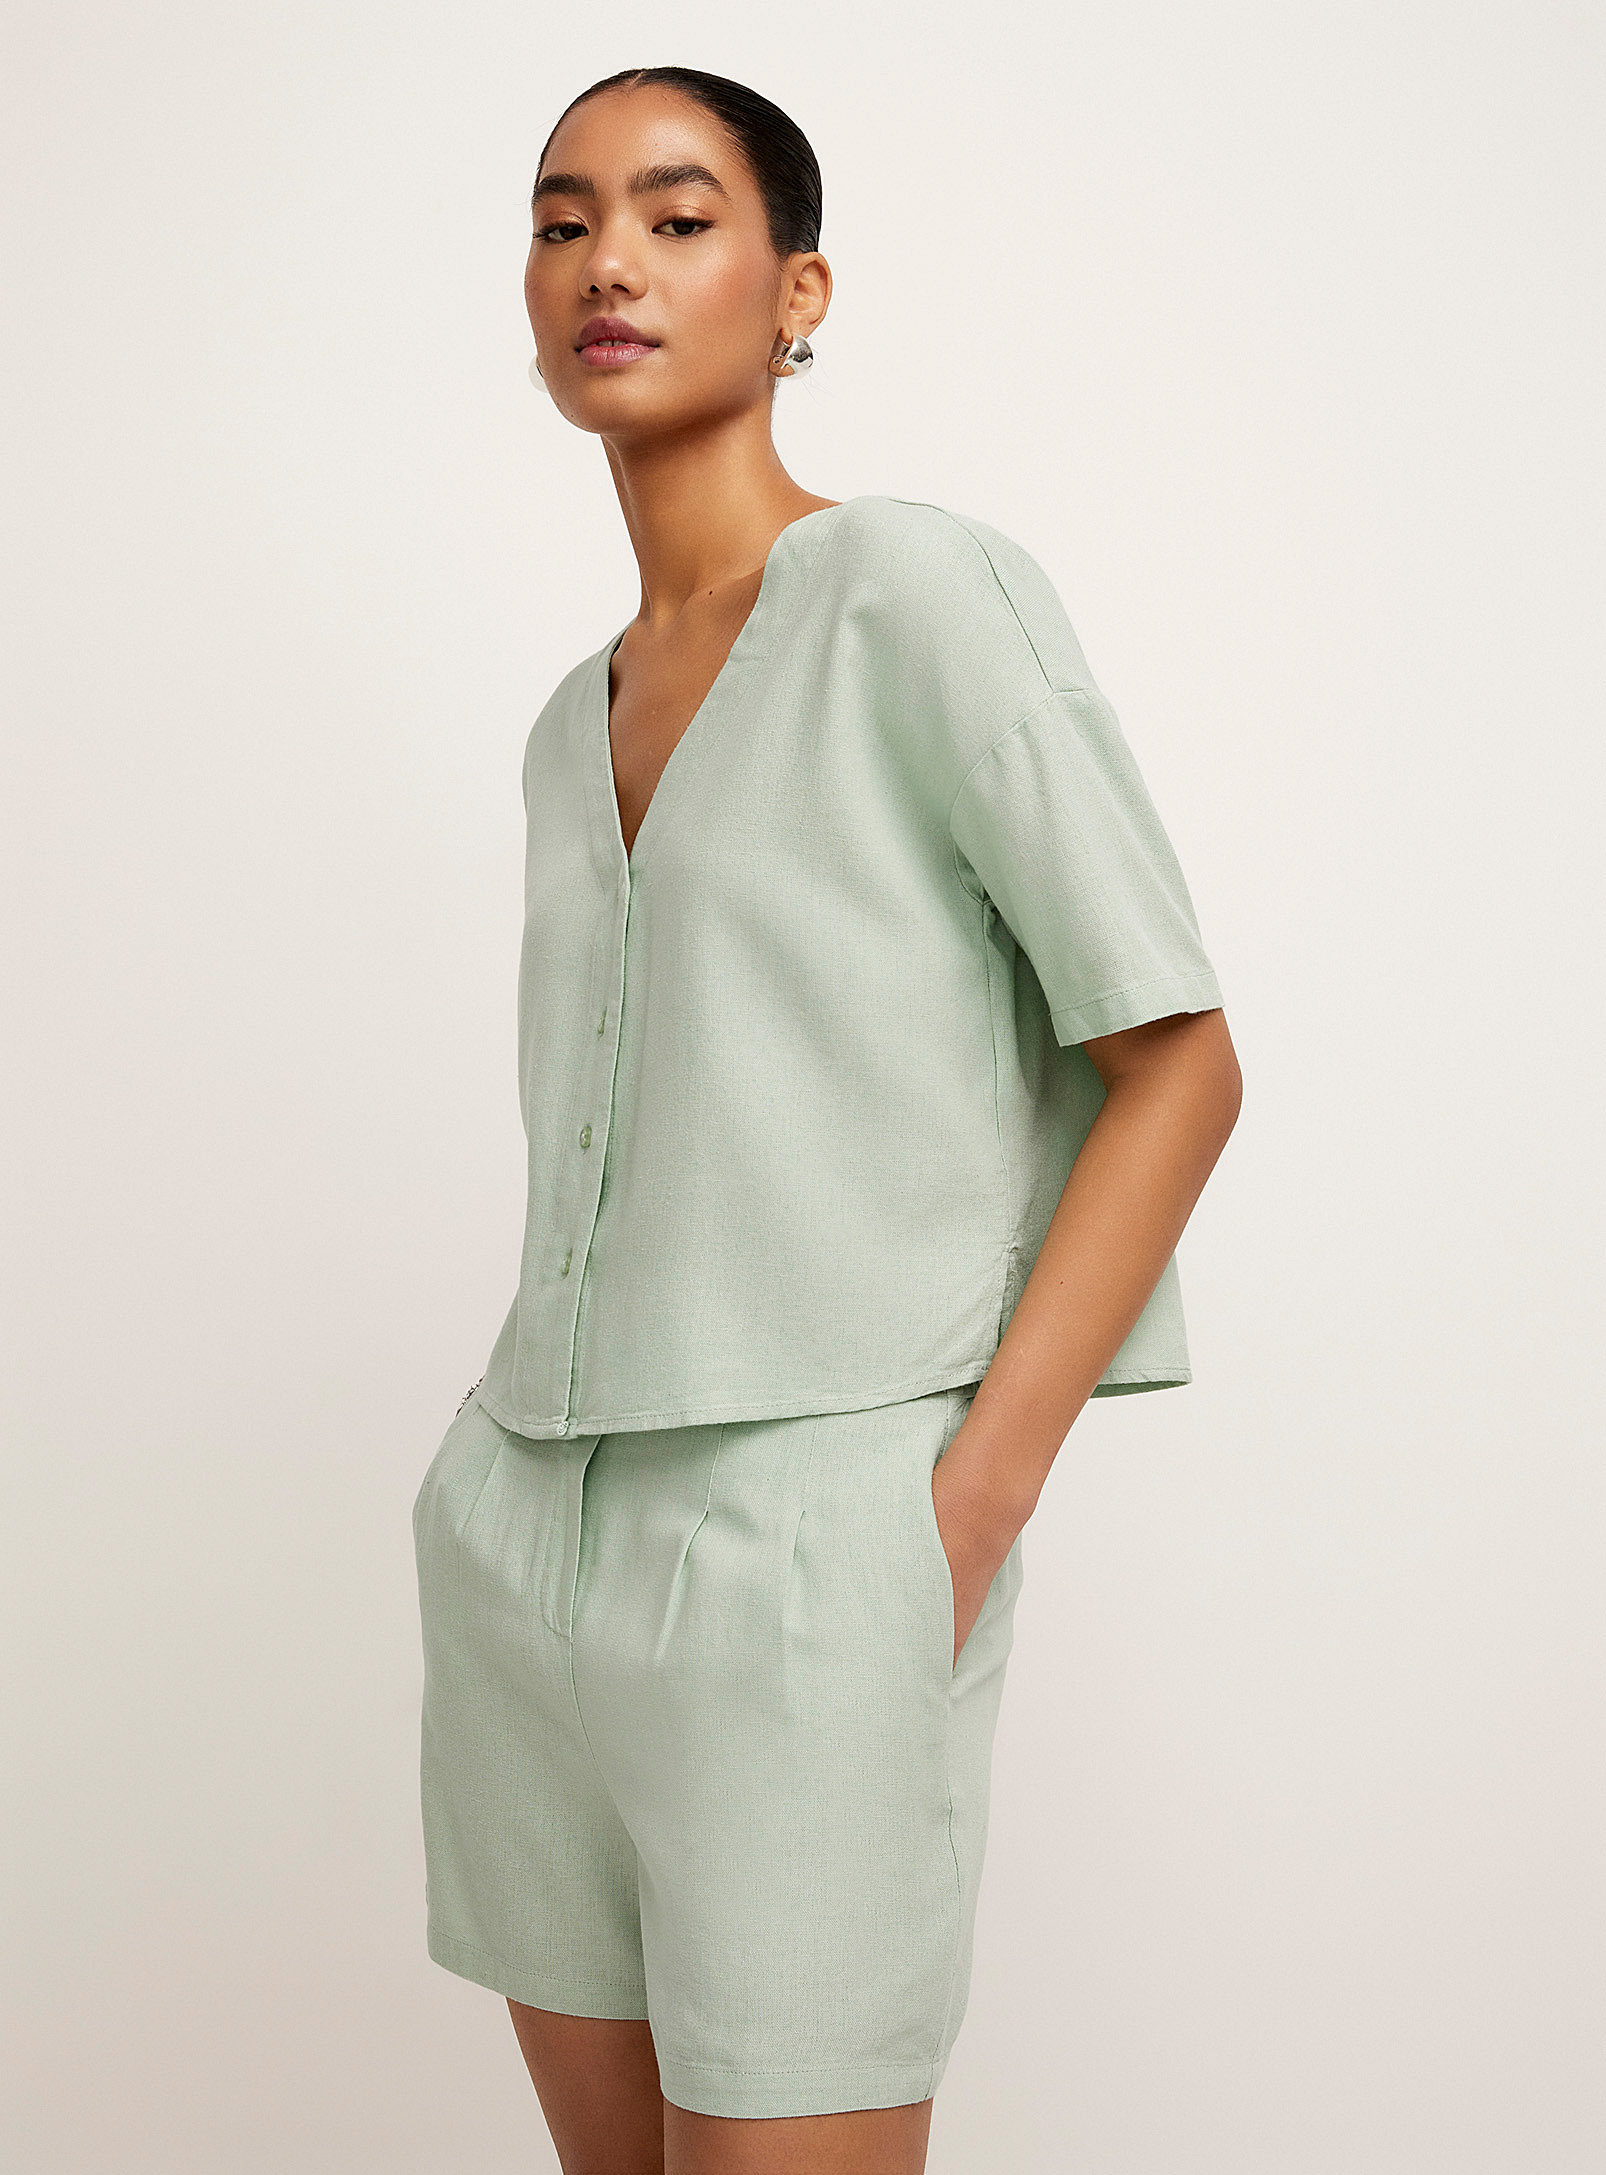 Vero Moda - Women's Touch of linen boxy blouse